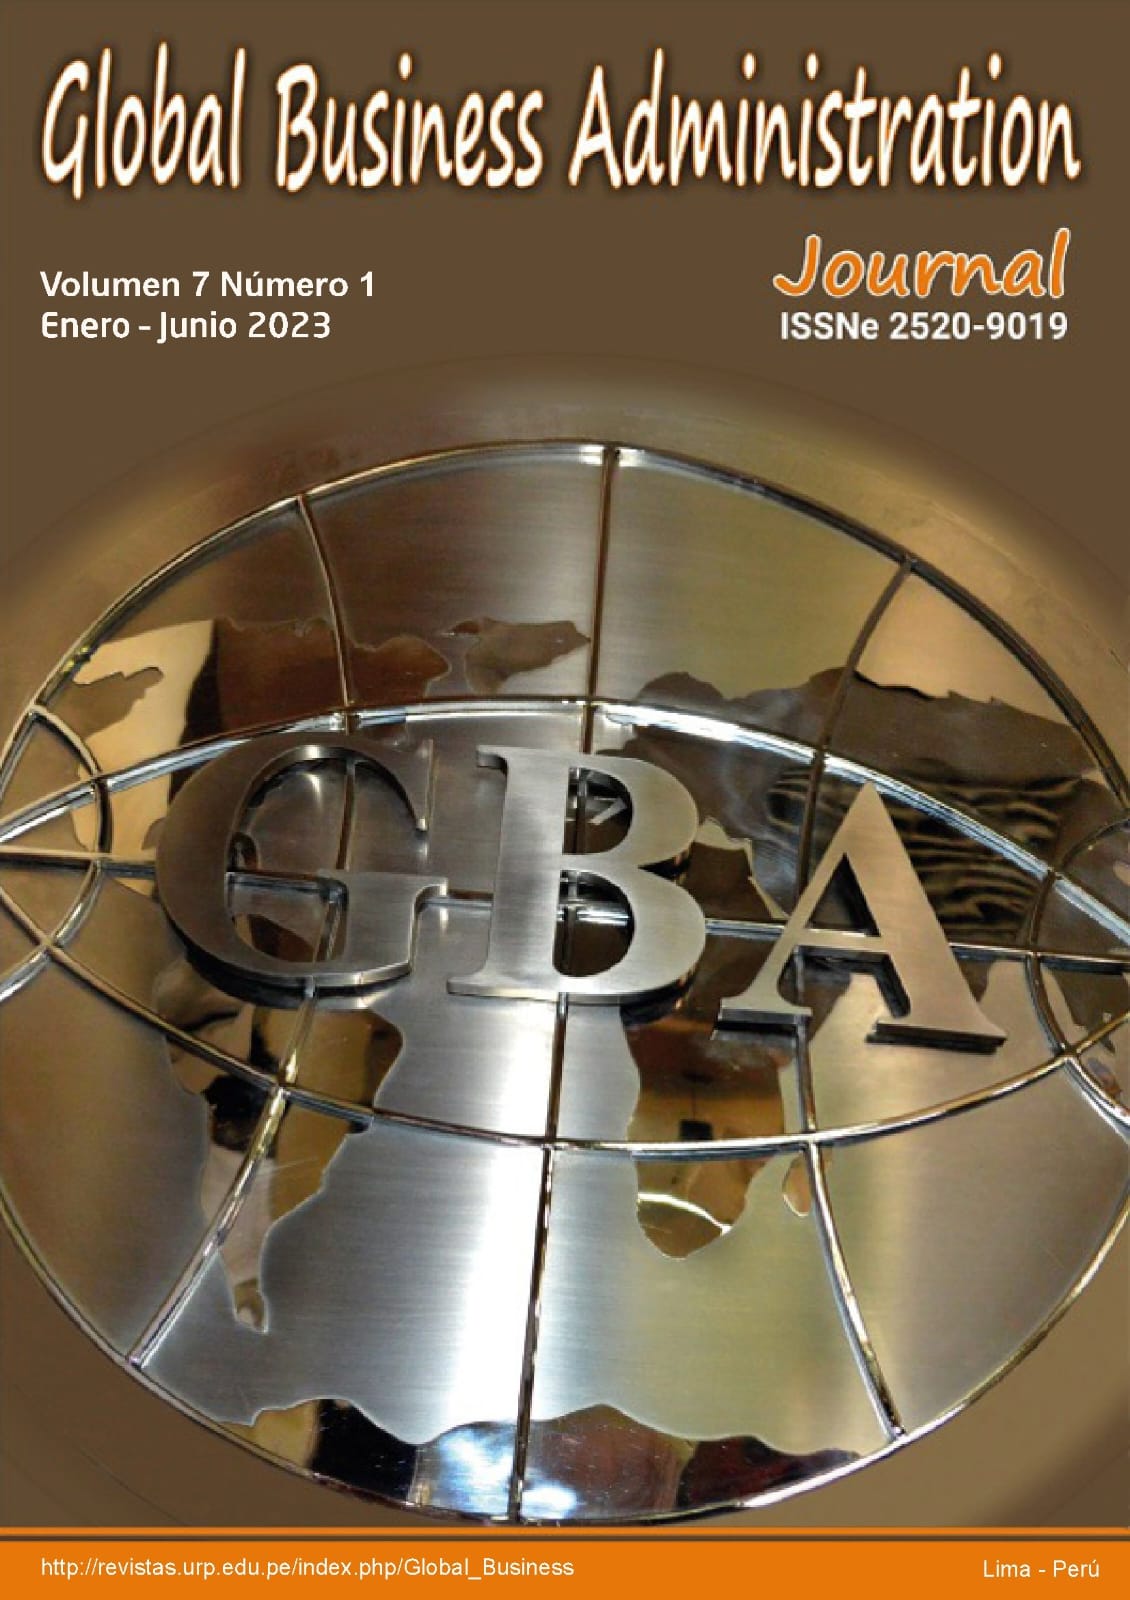 					Ver Vol. 7 Núm. 1 (2023): GLOBAL BUSINESS ADMINISTRATION JOURNAL
				